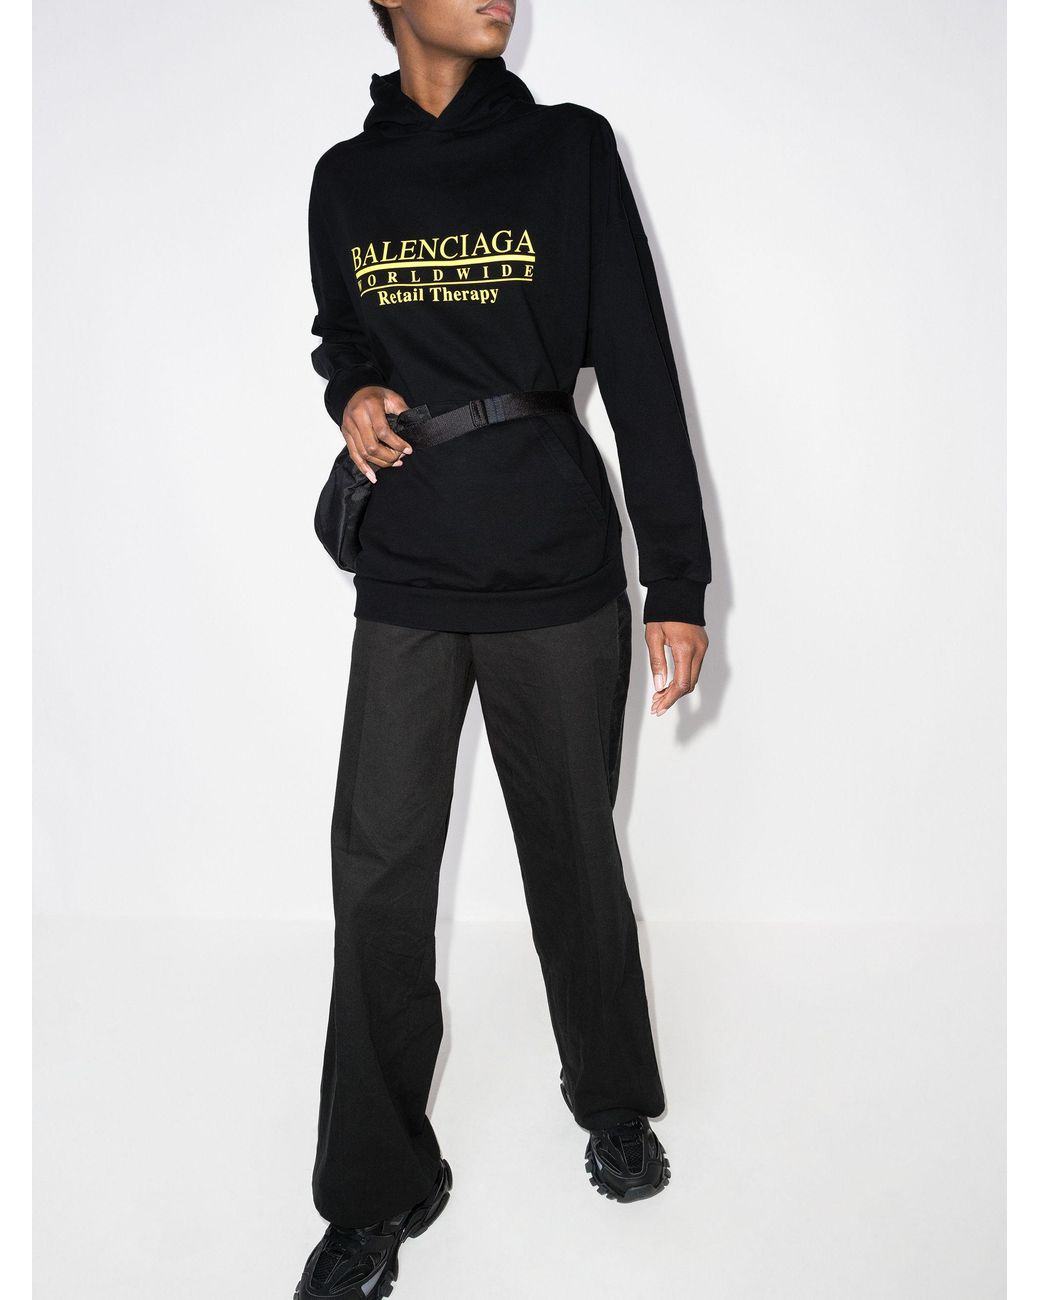 Balenciaga Retail Therapy Logo Cotton Hoodie in Black | Lyst